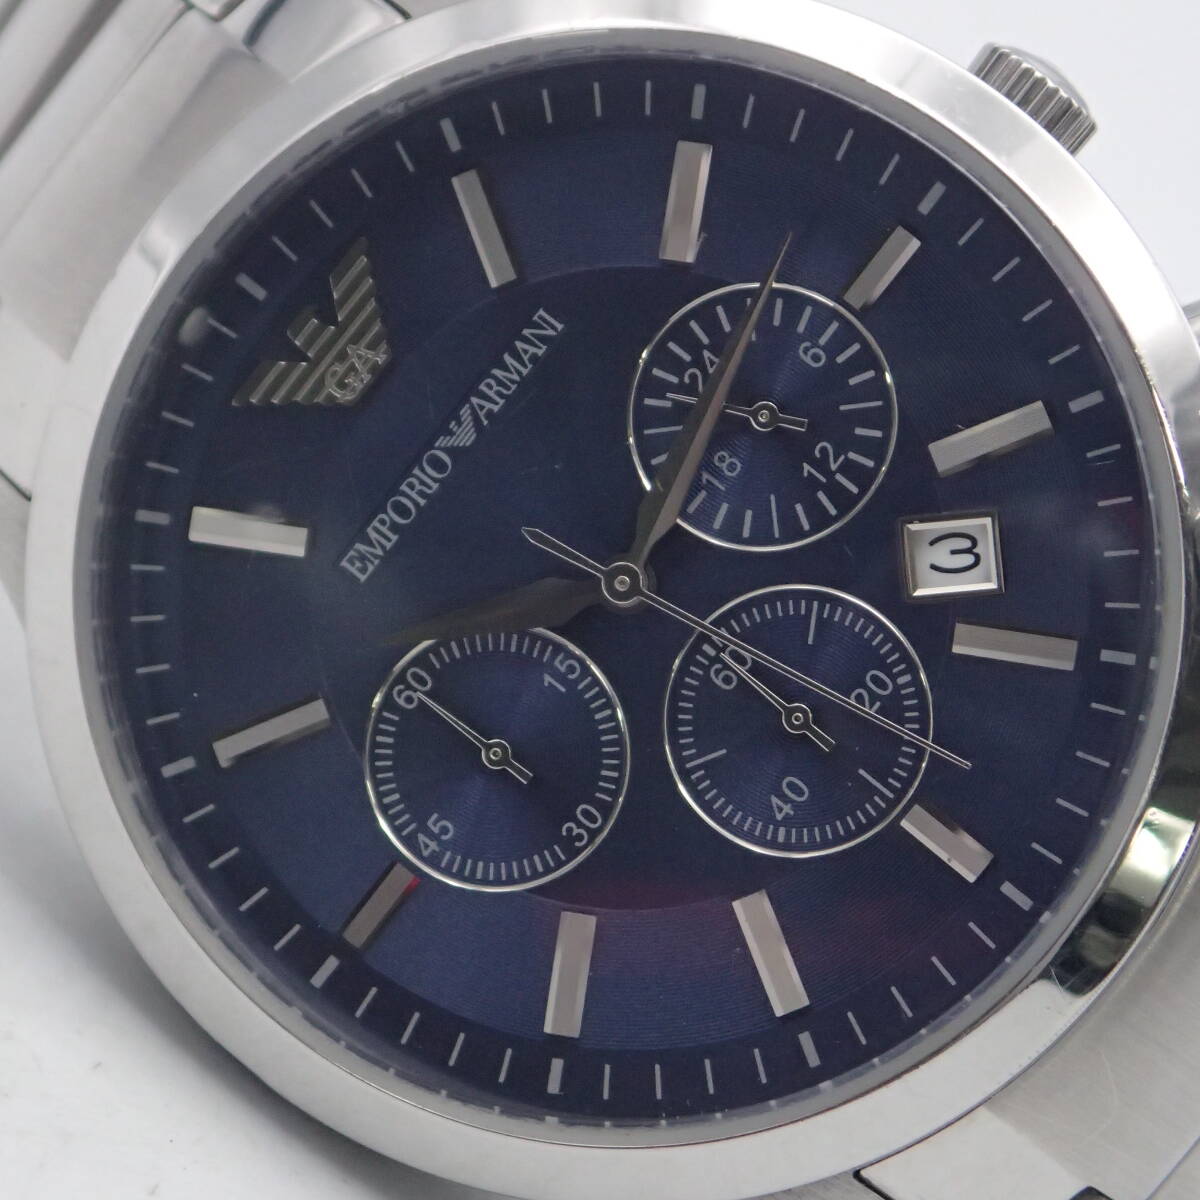 e04231/EMPORIO ARMANI Emporio Armani / кварц / мужские наручные часы / хронограф /smoseko/ циферблат темно-синий /AR-2448